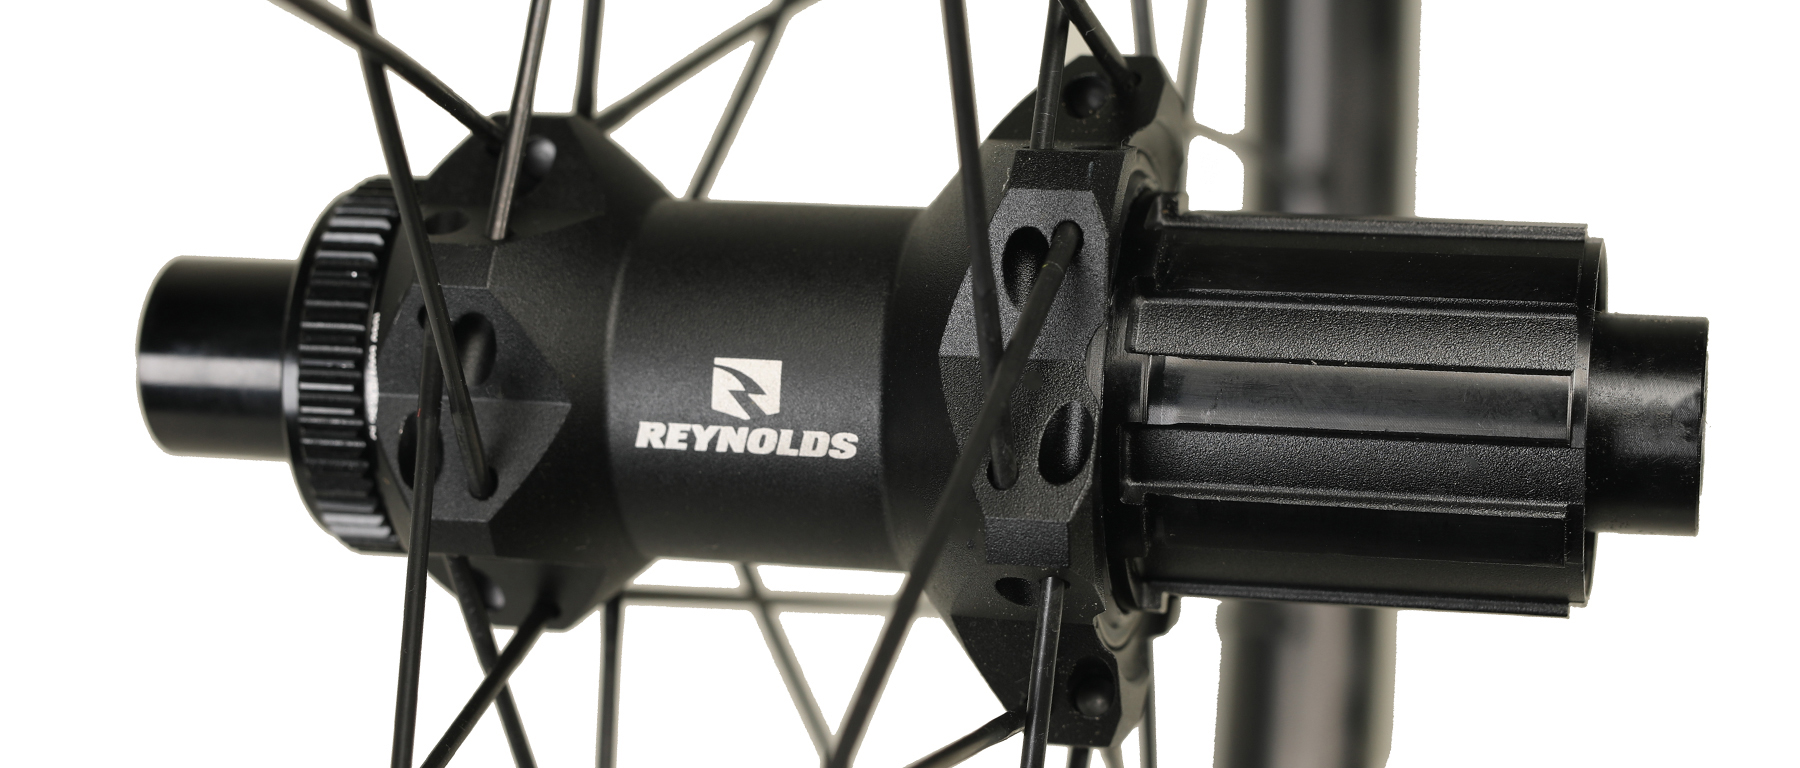 Reynolds AR29 Carbon Disc Wheelset